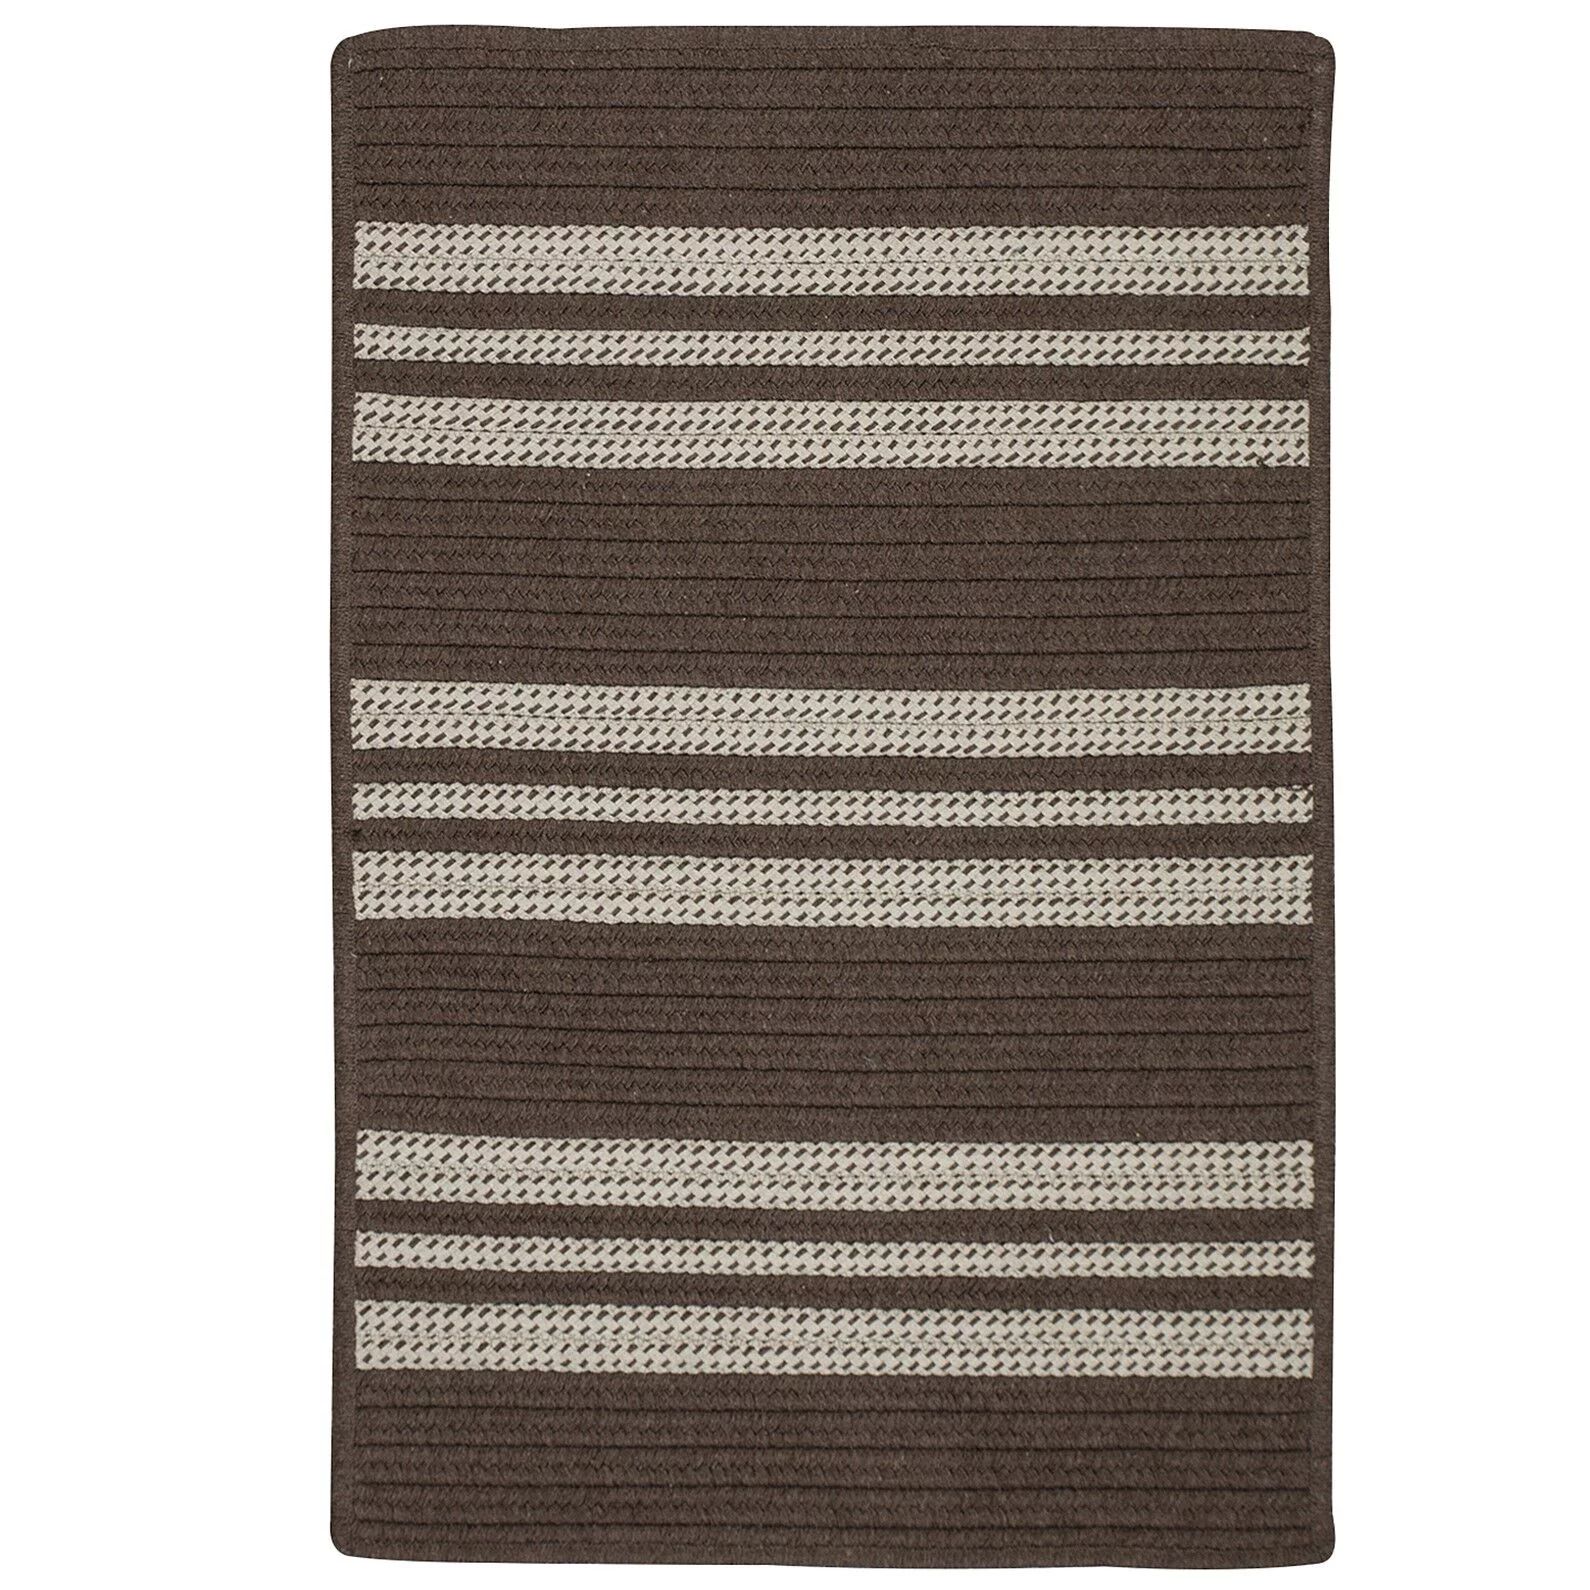 8' x 10' Brown Striped Handmade Braided Rectangular Area Throw Rug | Walmart (US)